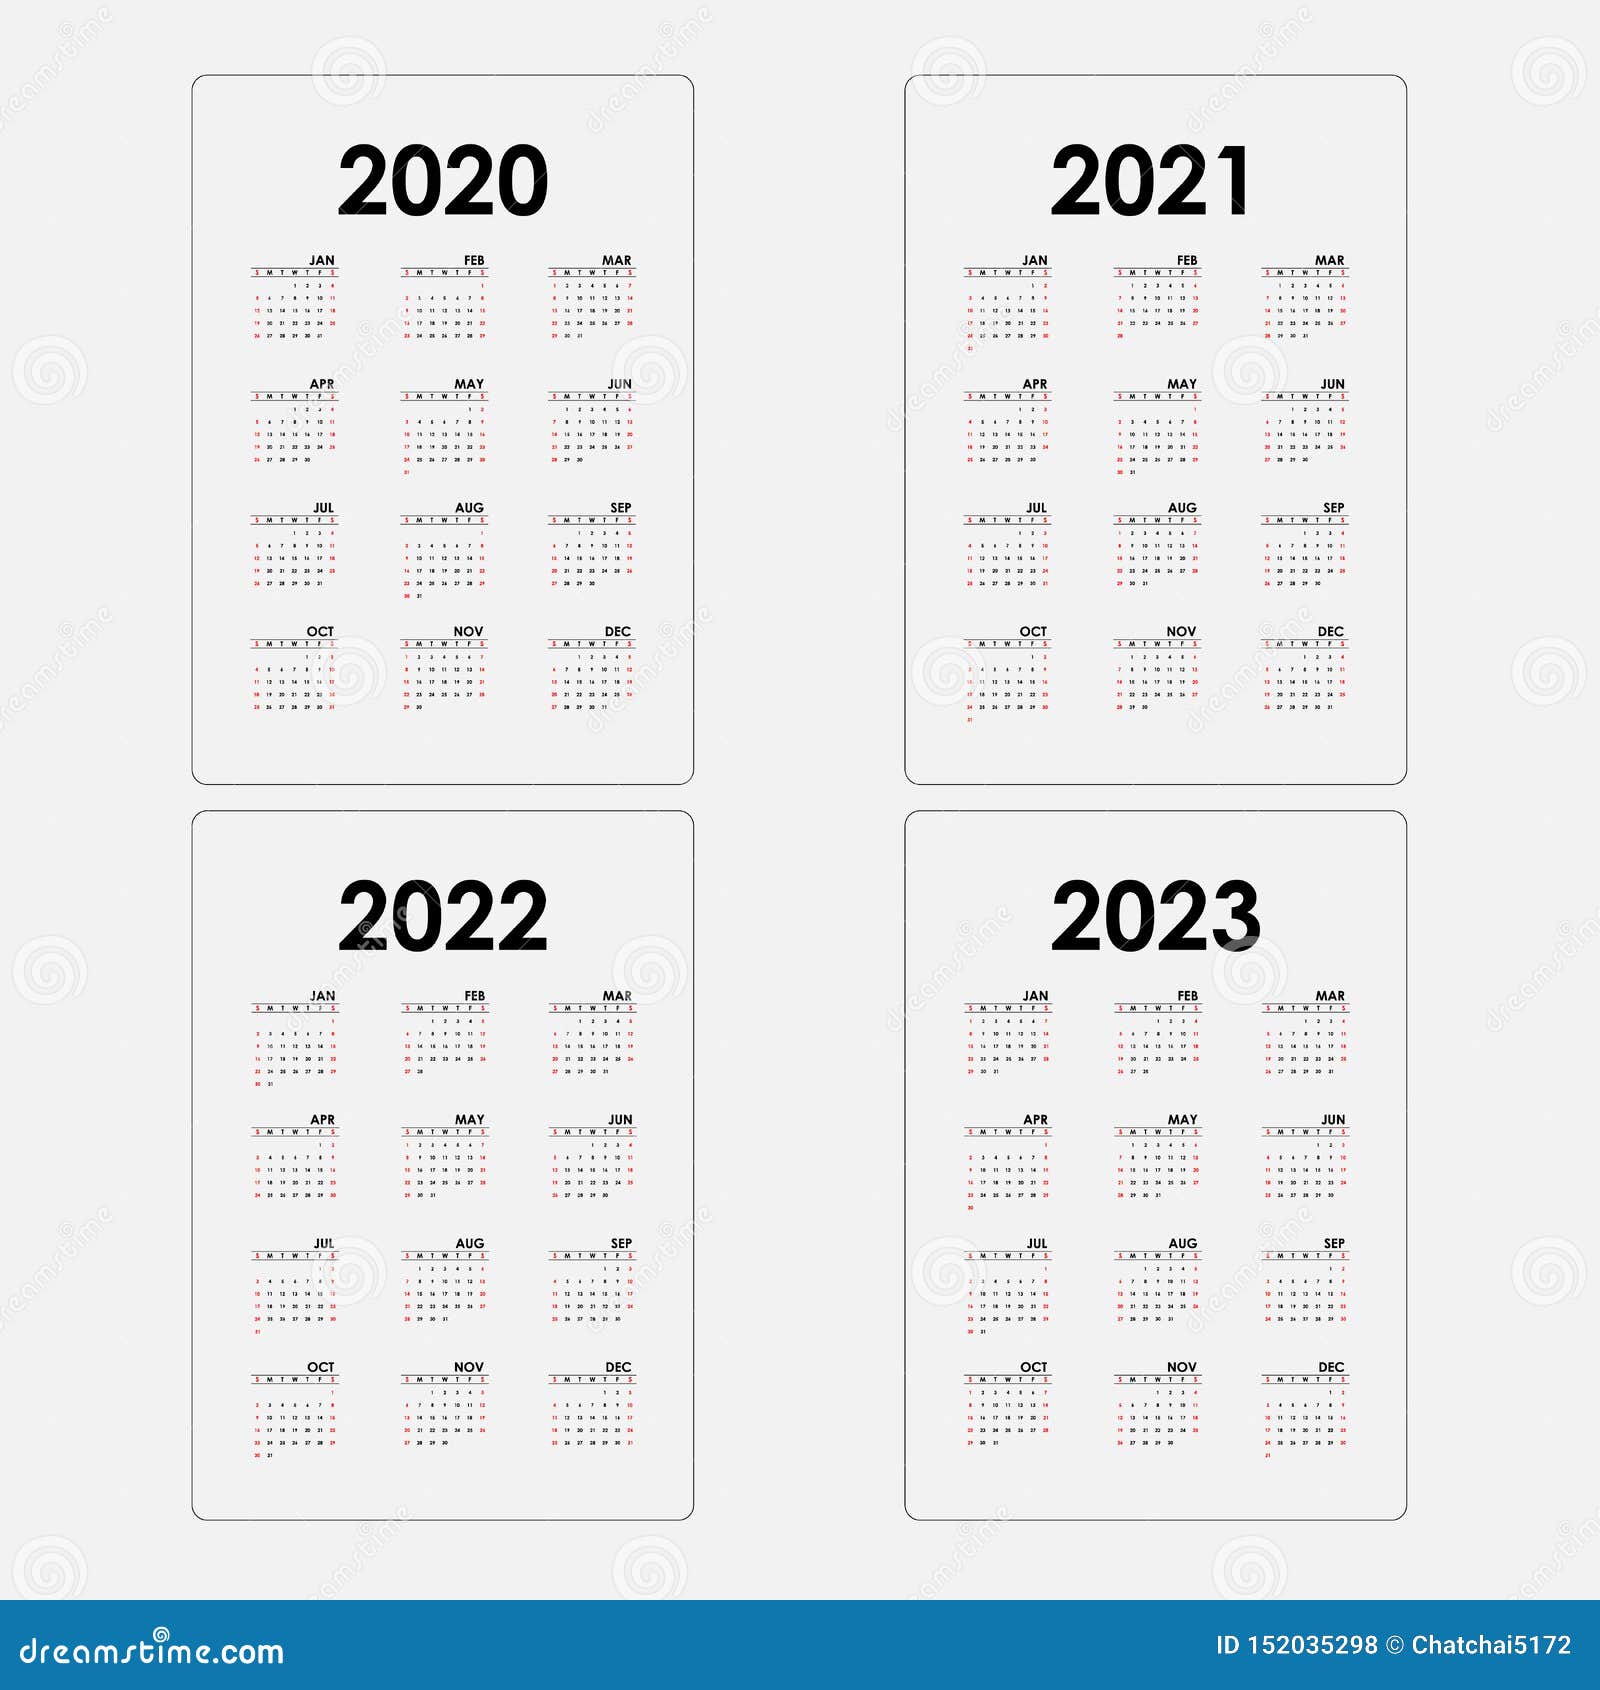 Calendrier Handball 2022 2023 Calendar 2020, 2021,2022 And 2023 Calendar Template.Yearly 